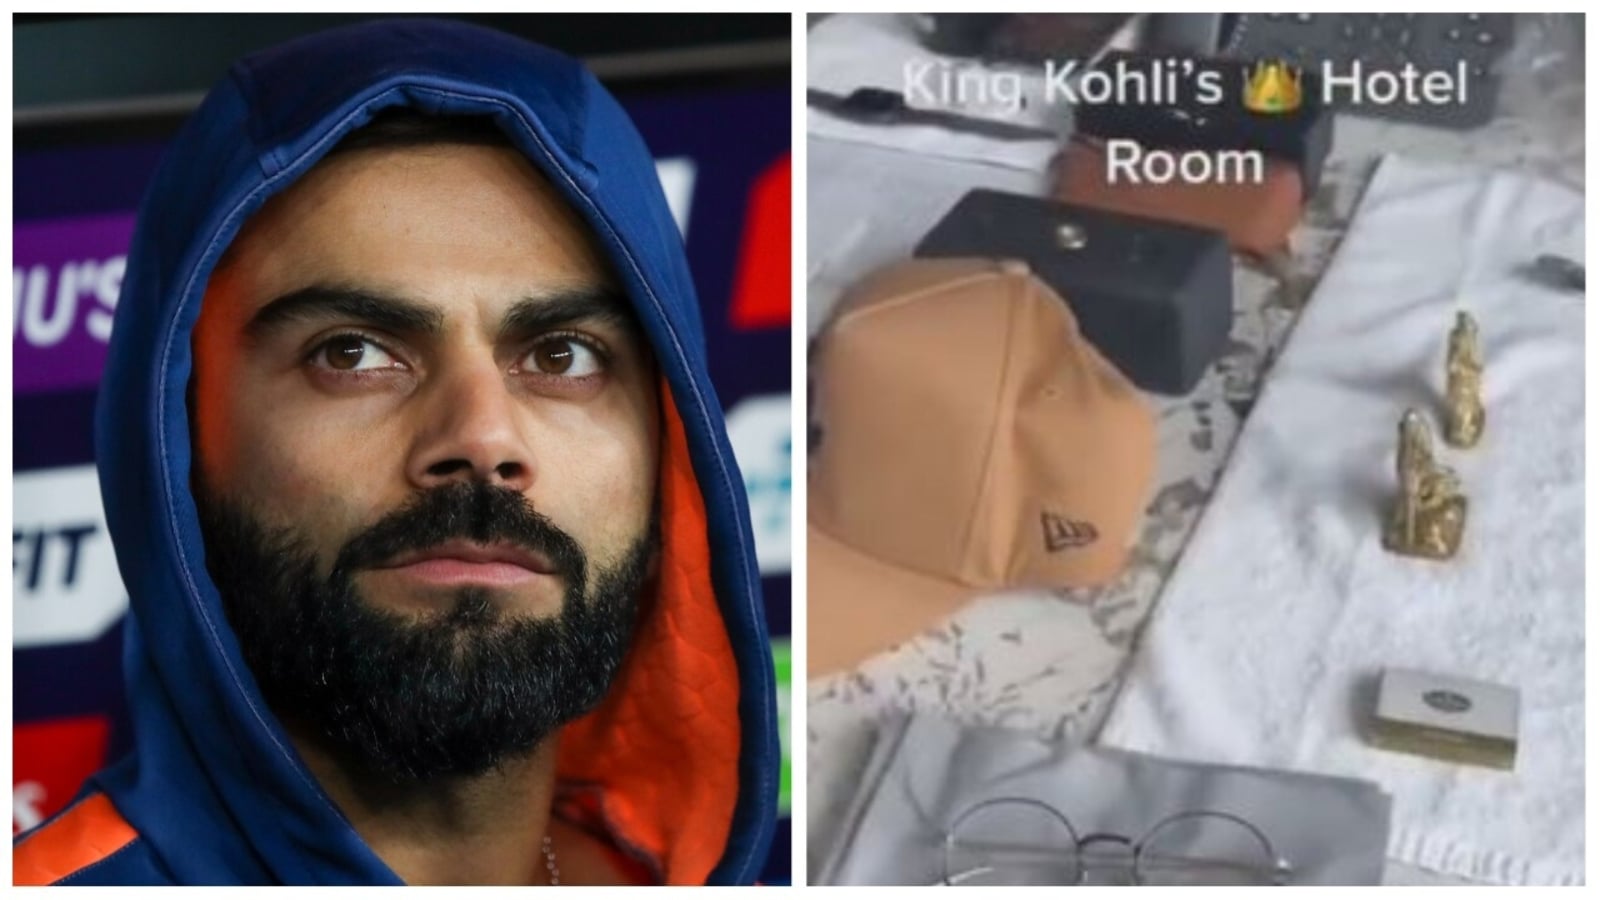 Kohli Xxx Video - Appalling. Invasion of privacy': Virat Kohli fumes as hotel room video  leaked | Cricket - Hindustan Times